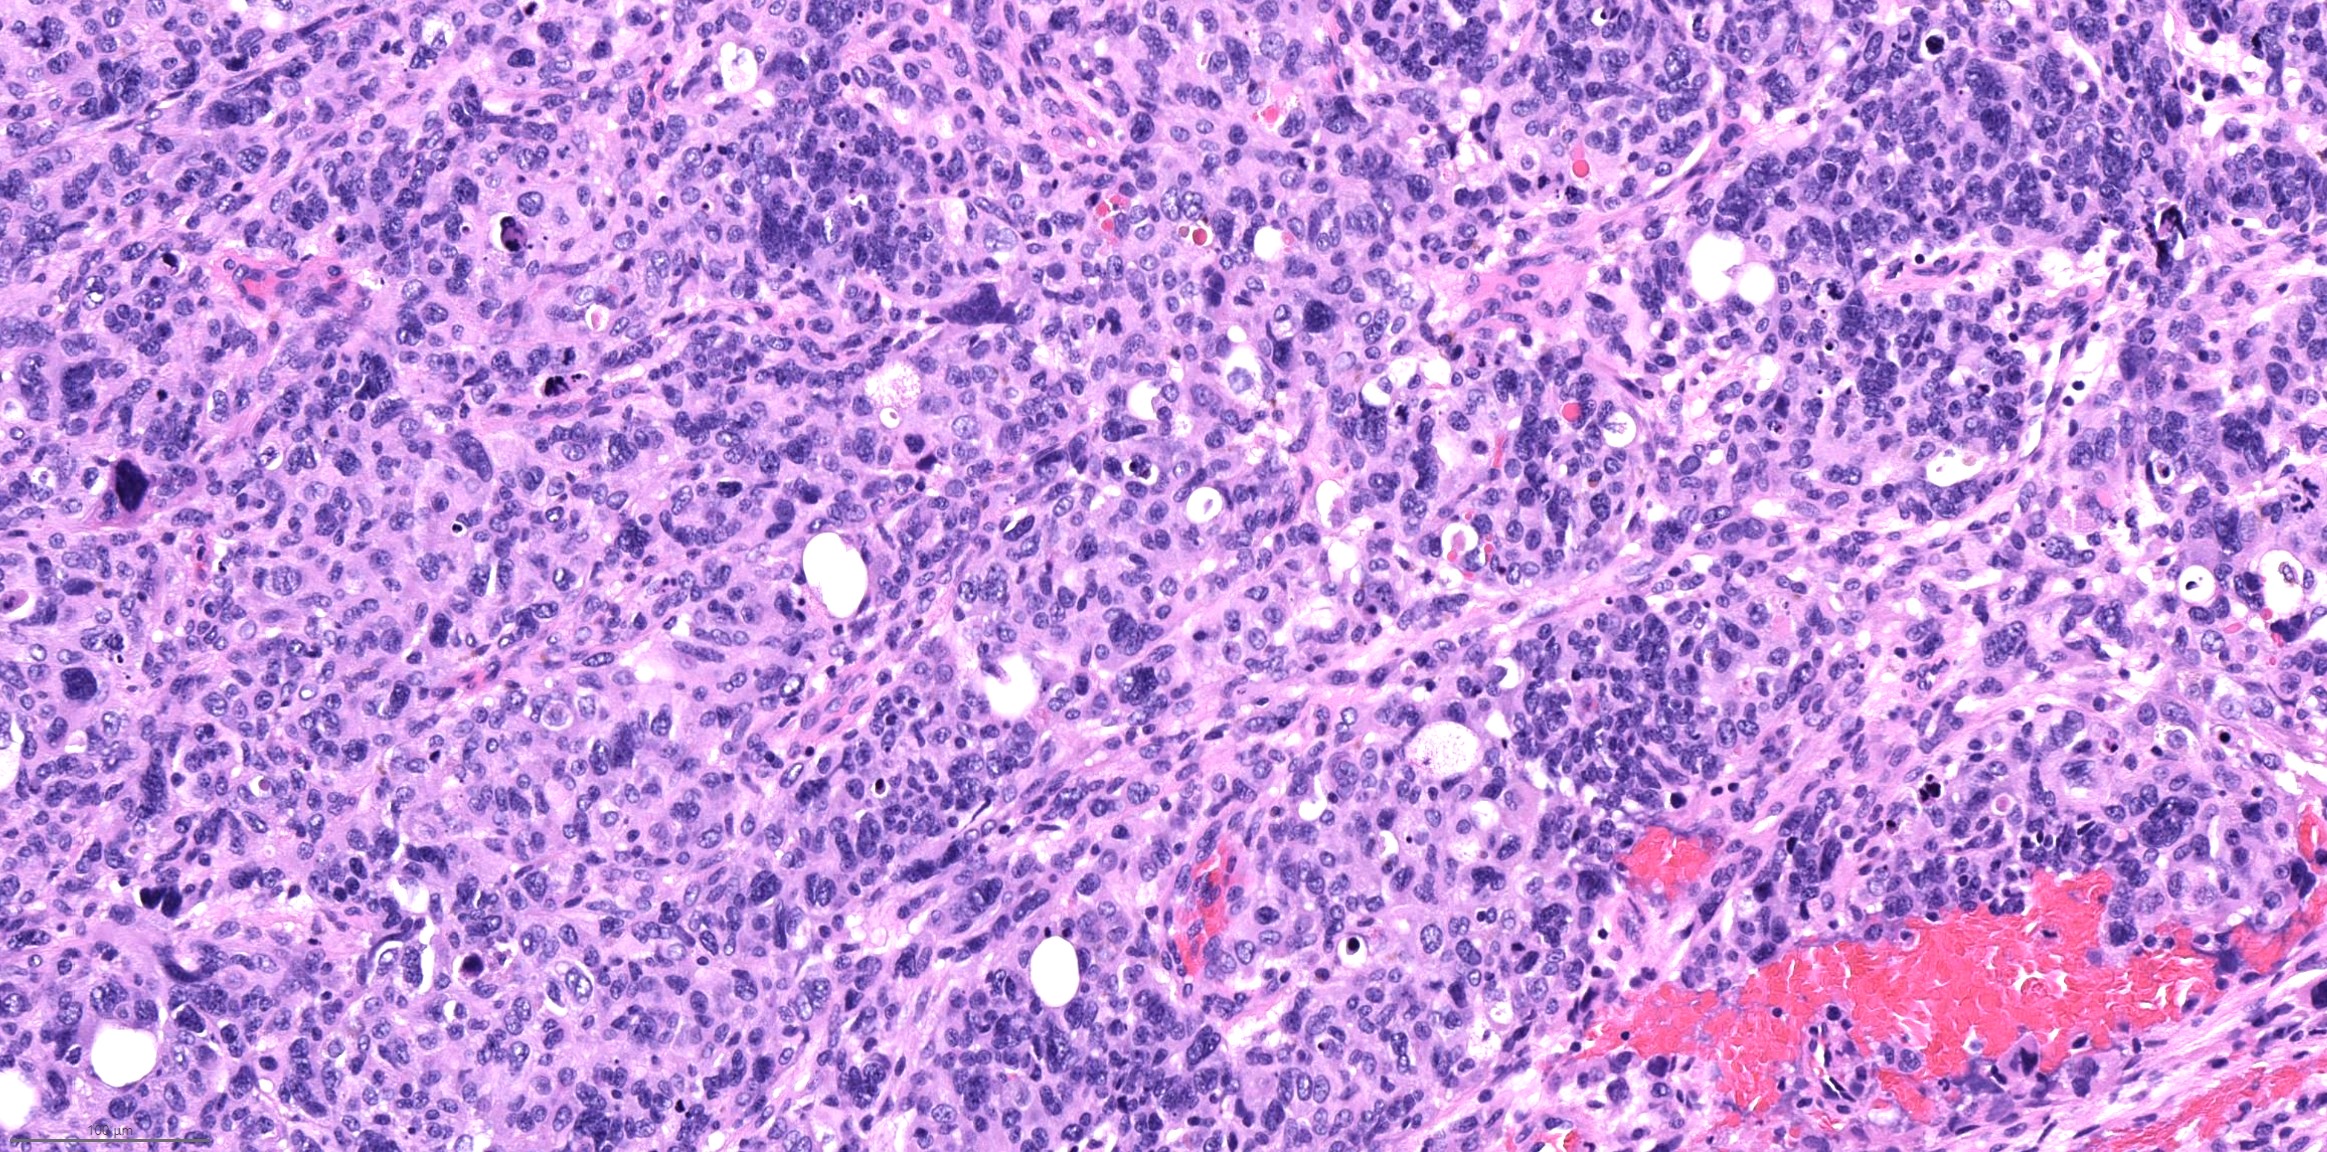 Large tumor cells